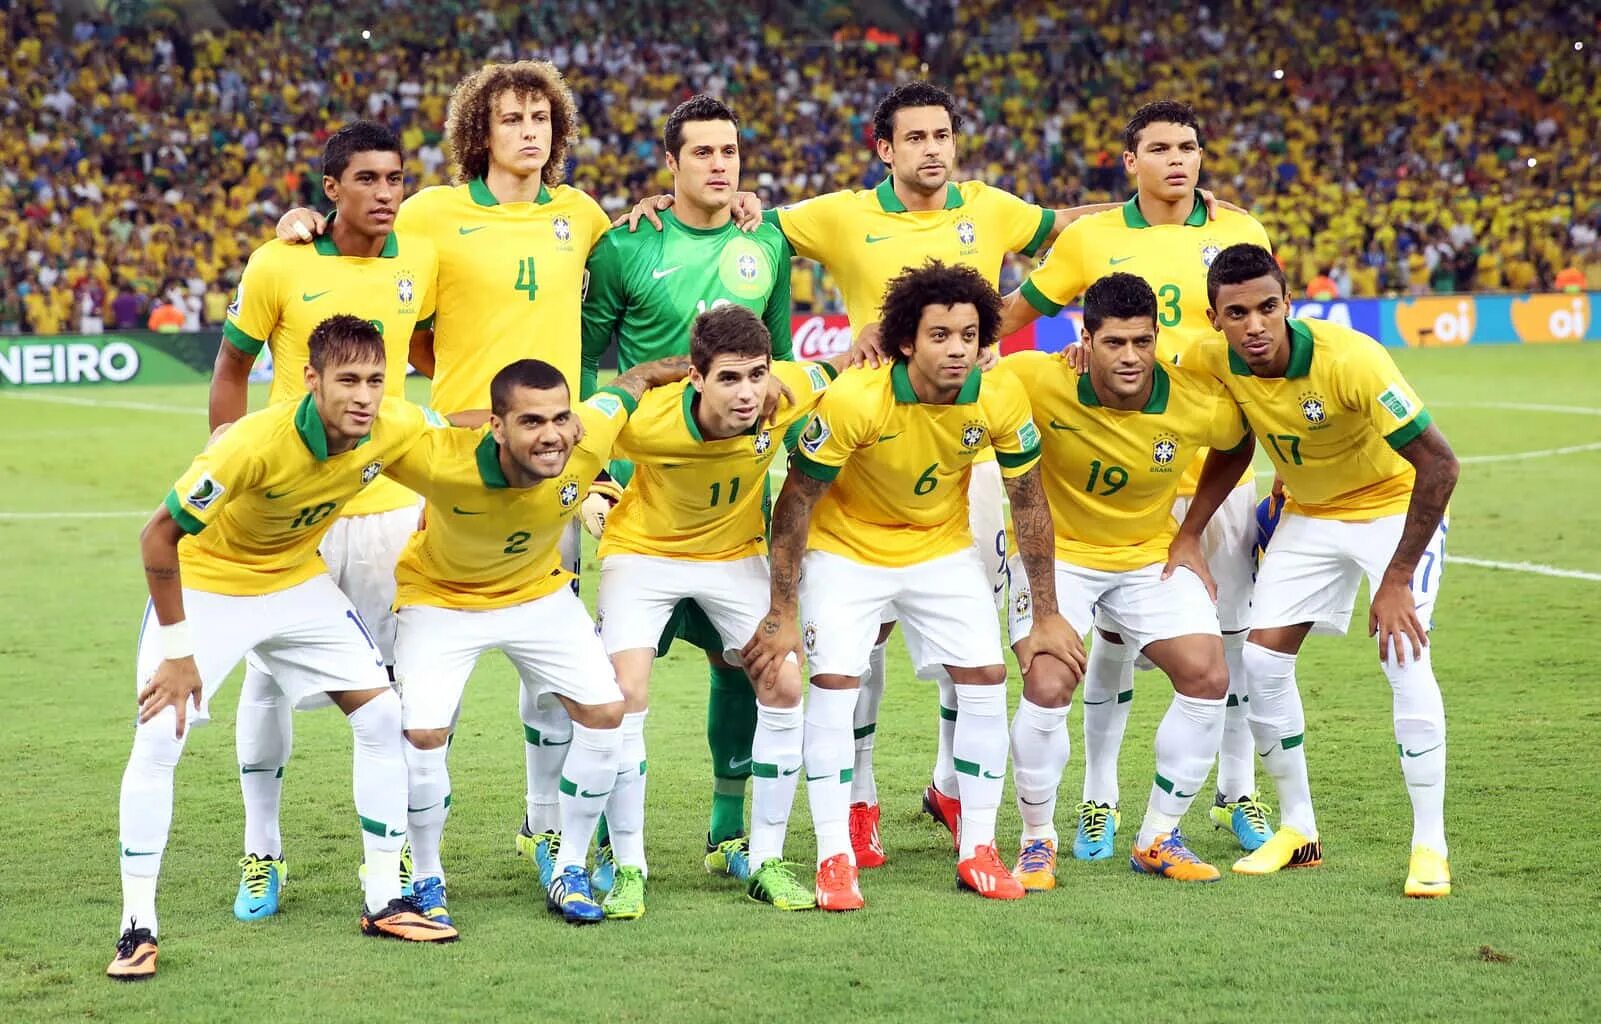 Fifa brazil. Команда Бразилии по футболу 2014. Сборная Бразилии по футболу 2014. Сборная Бразилии. Сборная Бразилии по футболу 2014 состав.